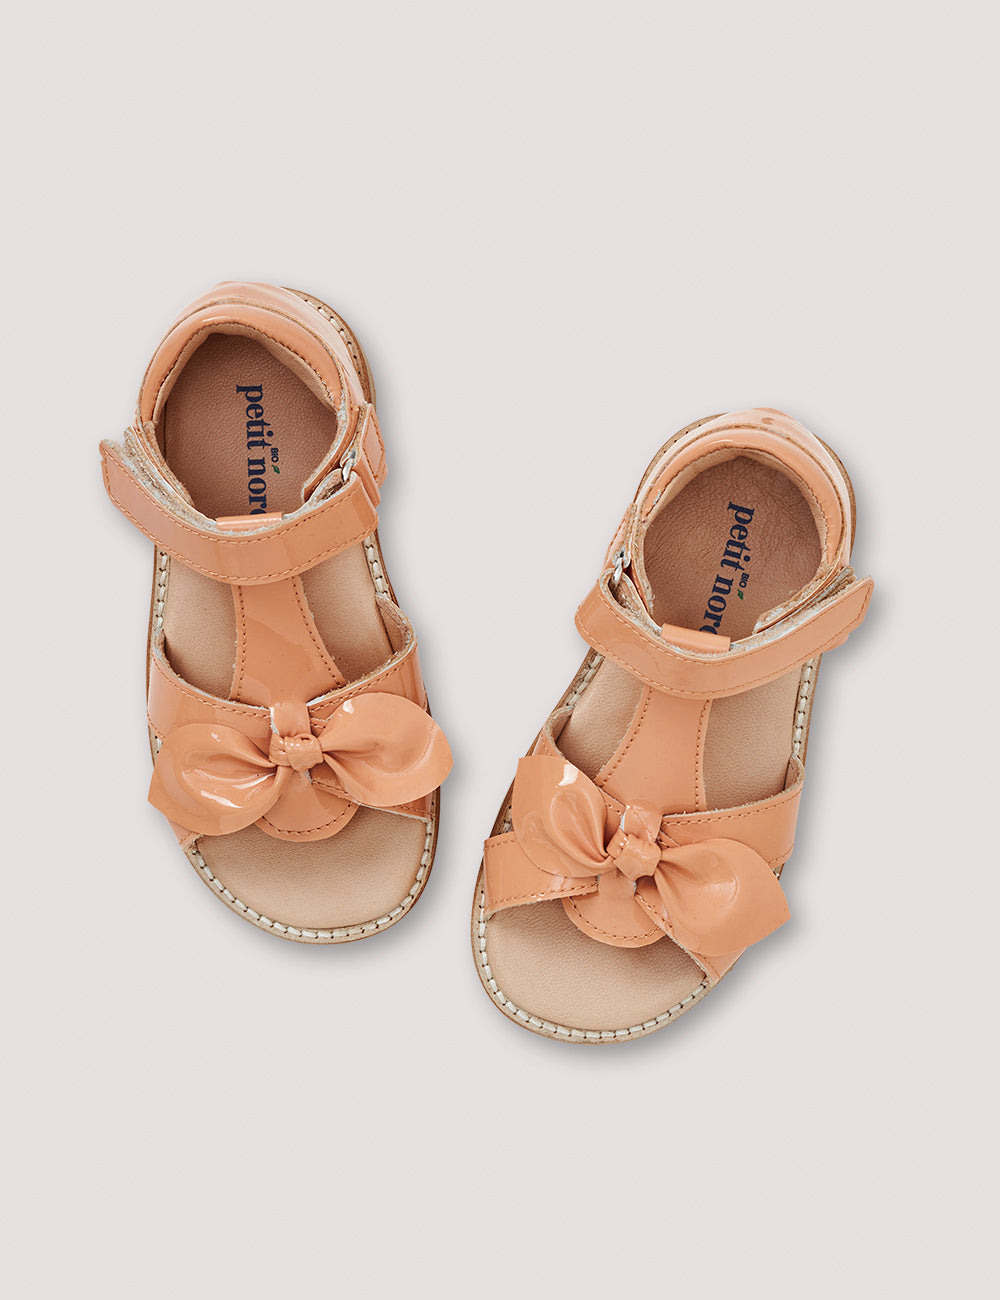 Petit Nord Apricot Patent Bow Sandal-Tassel Children Shoes